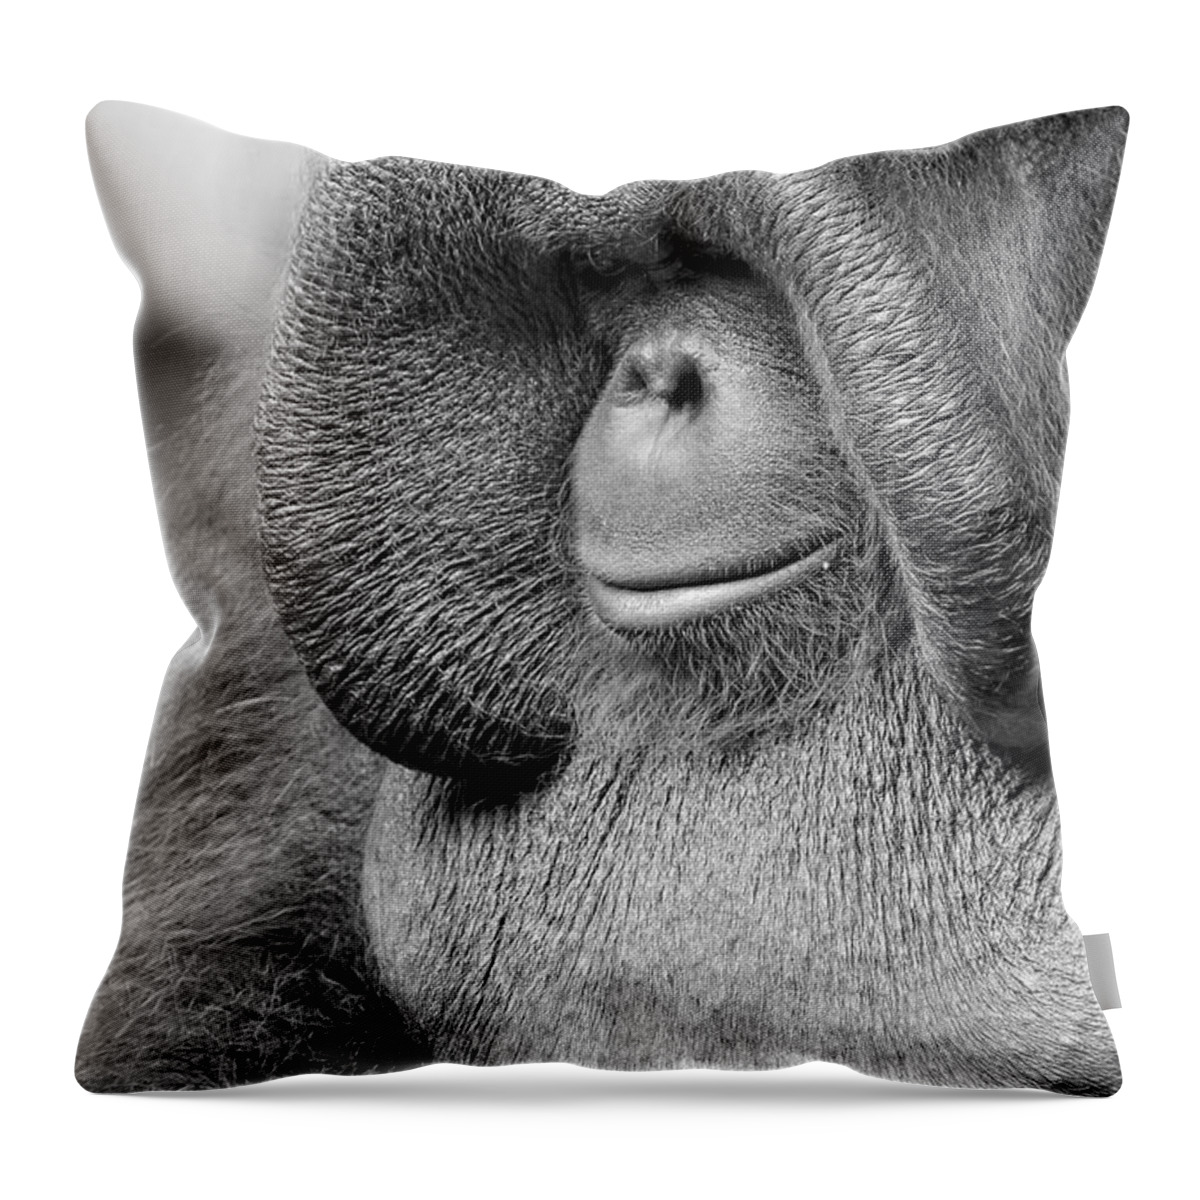 Orangutan Throw Pillow featuring the photograph Bornean Orangutan V by Lourry Legarde